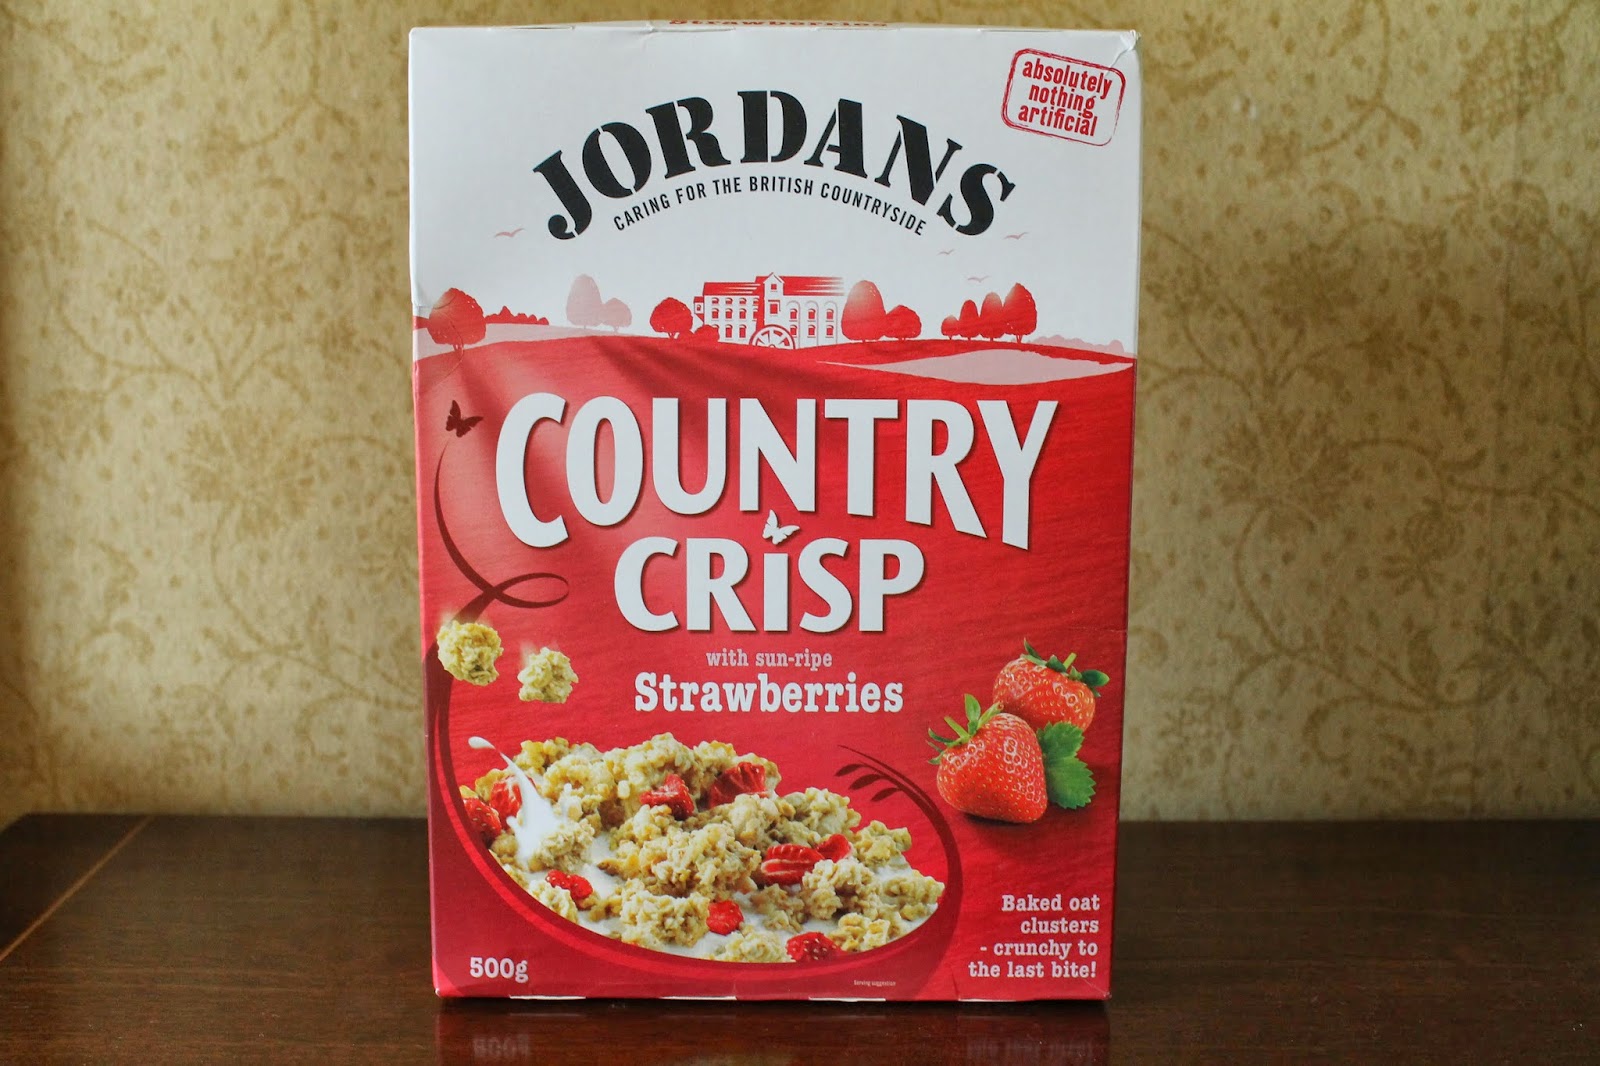 Jordans Country Crisp with Strawberries